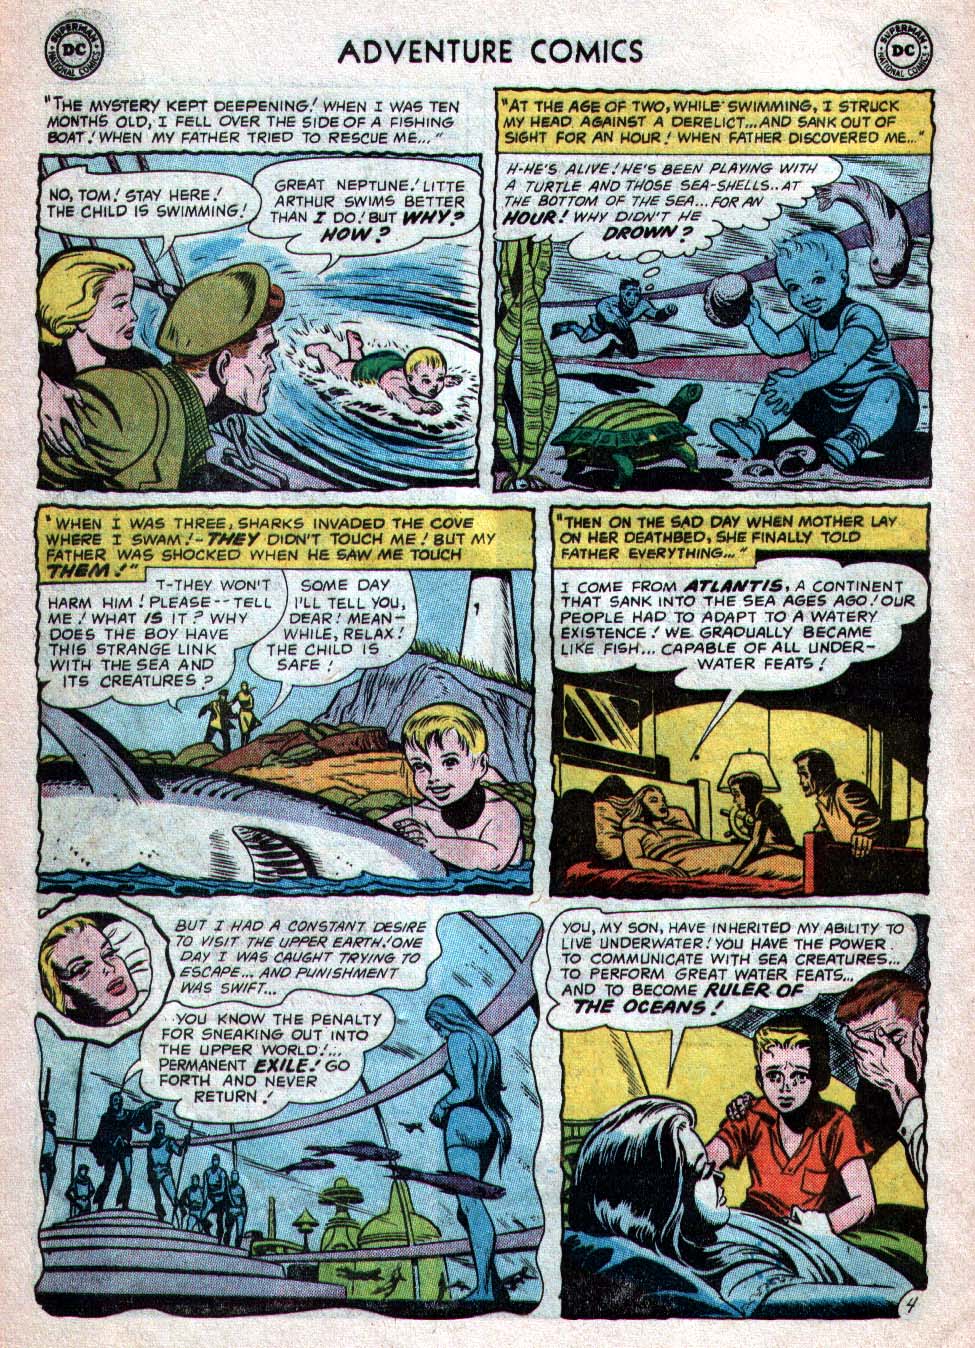 ADVENTURE COMICS #260 - "How Aquaman Got His Powers", by Robert Bernstein and Ramona Fradon